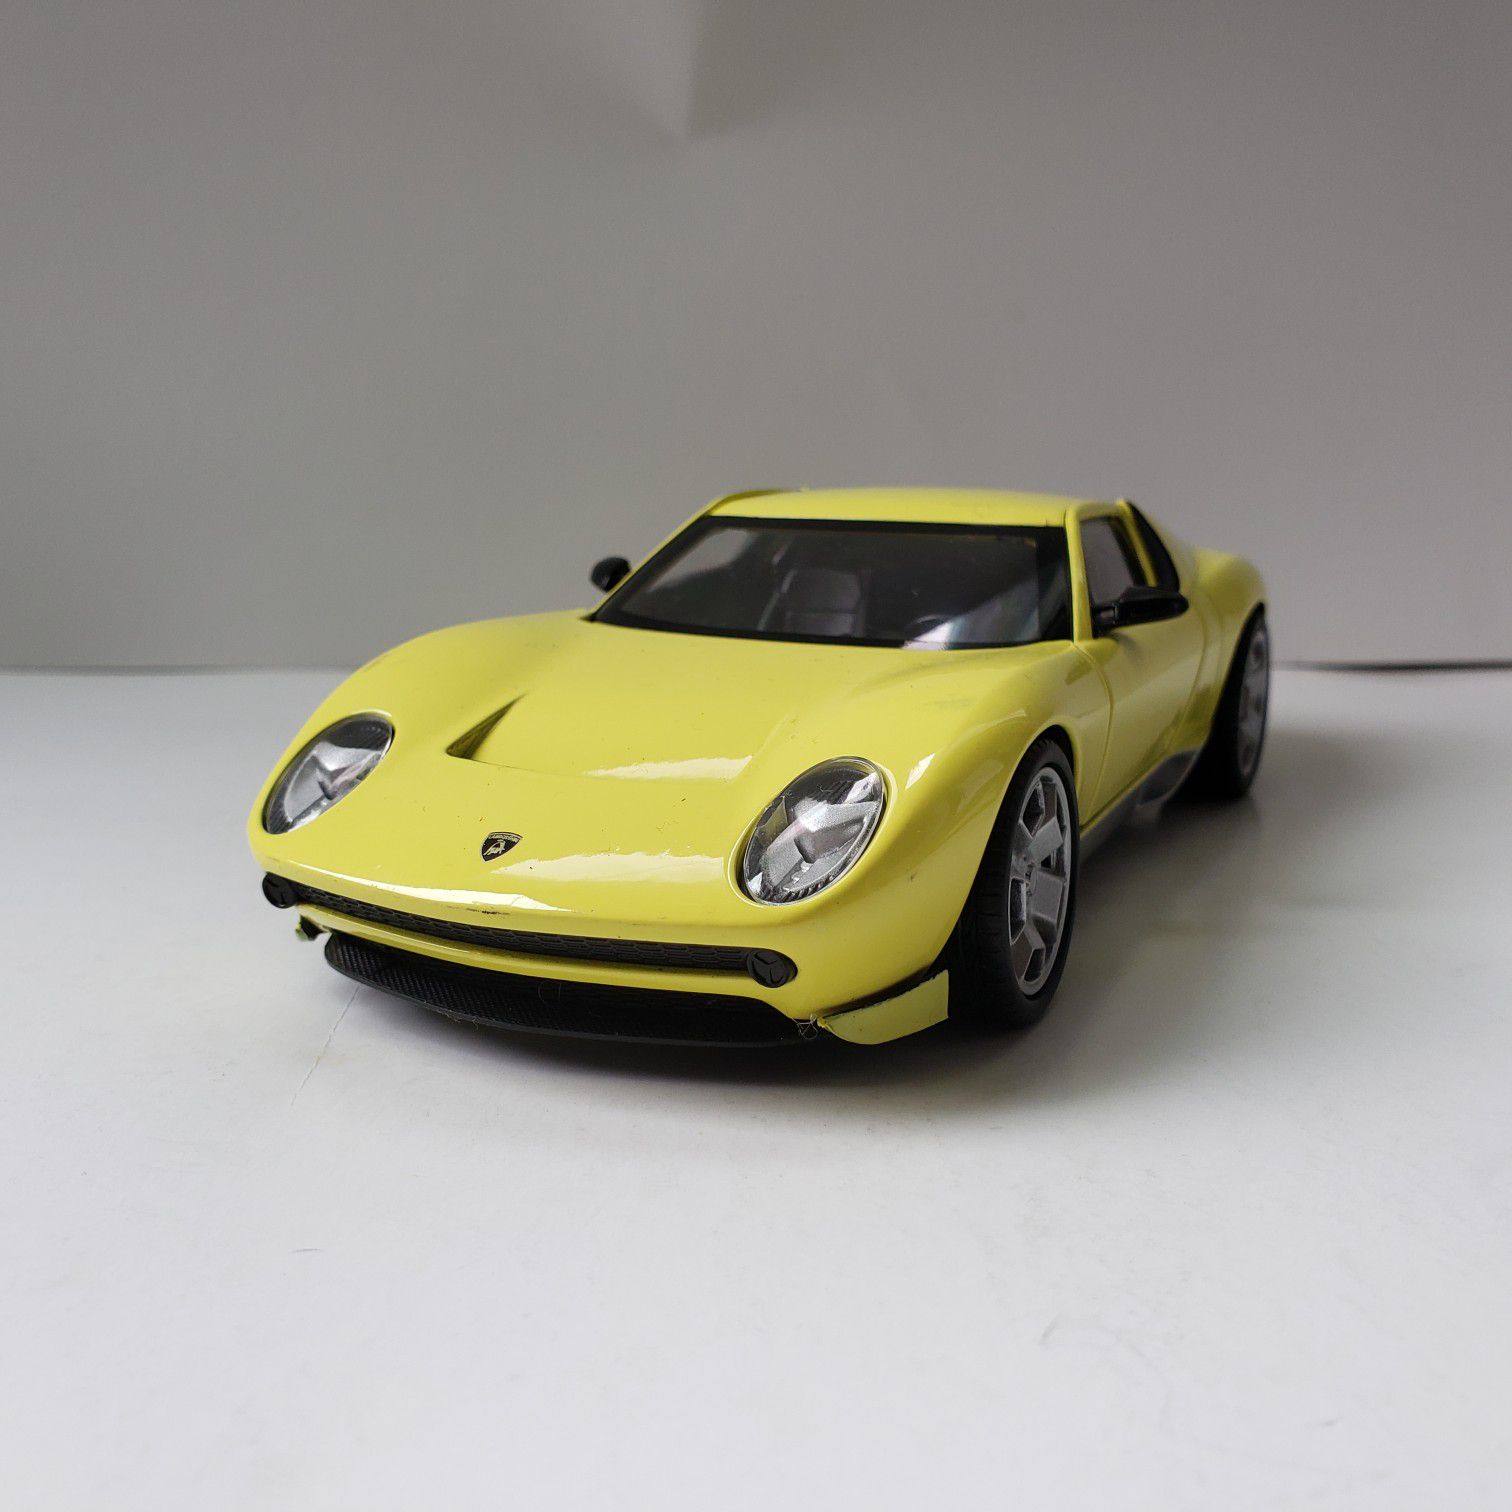 NEW Large Yellow Lamborghini Miura Concept Italian Super Car Toy Diecast Metal Model Scale 1/24 1:24 124